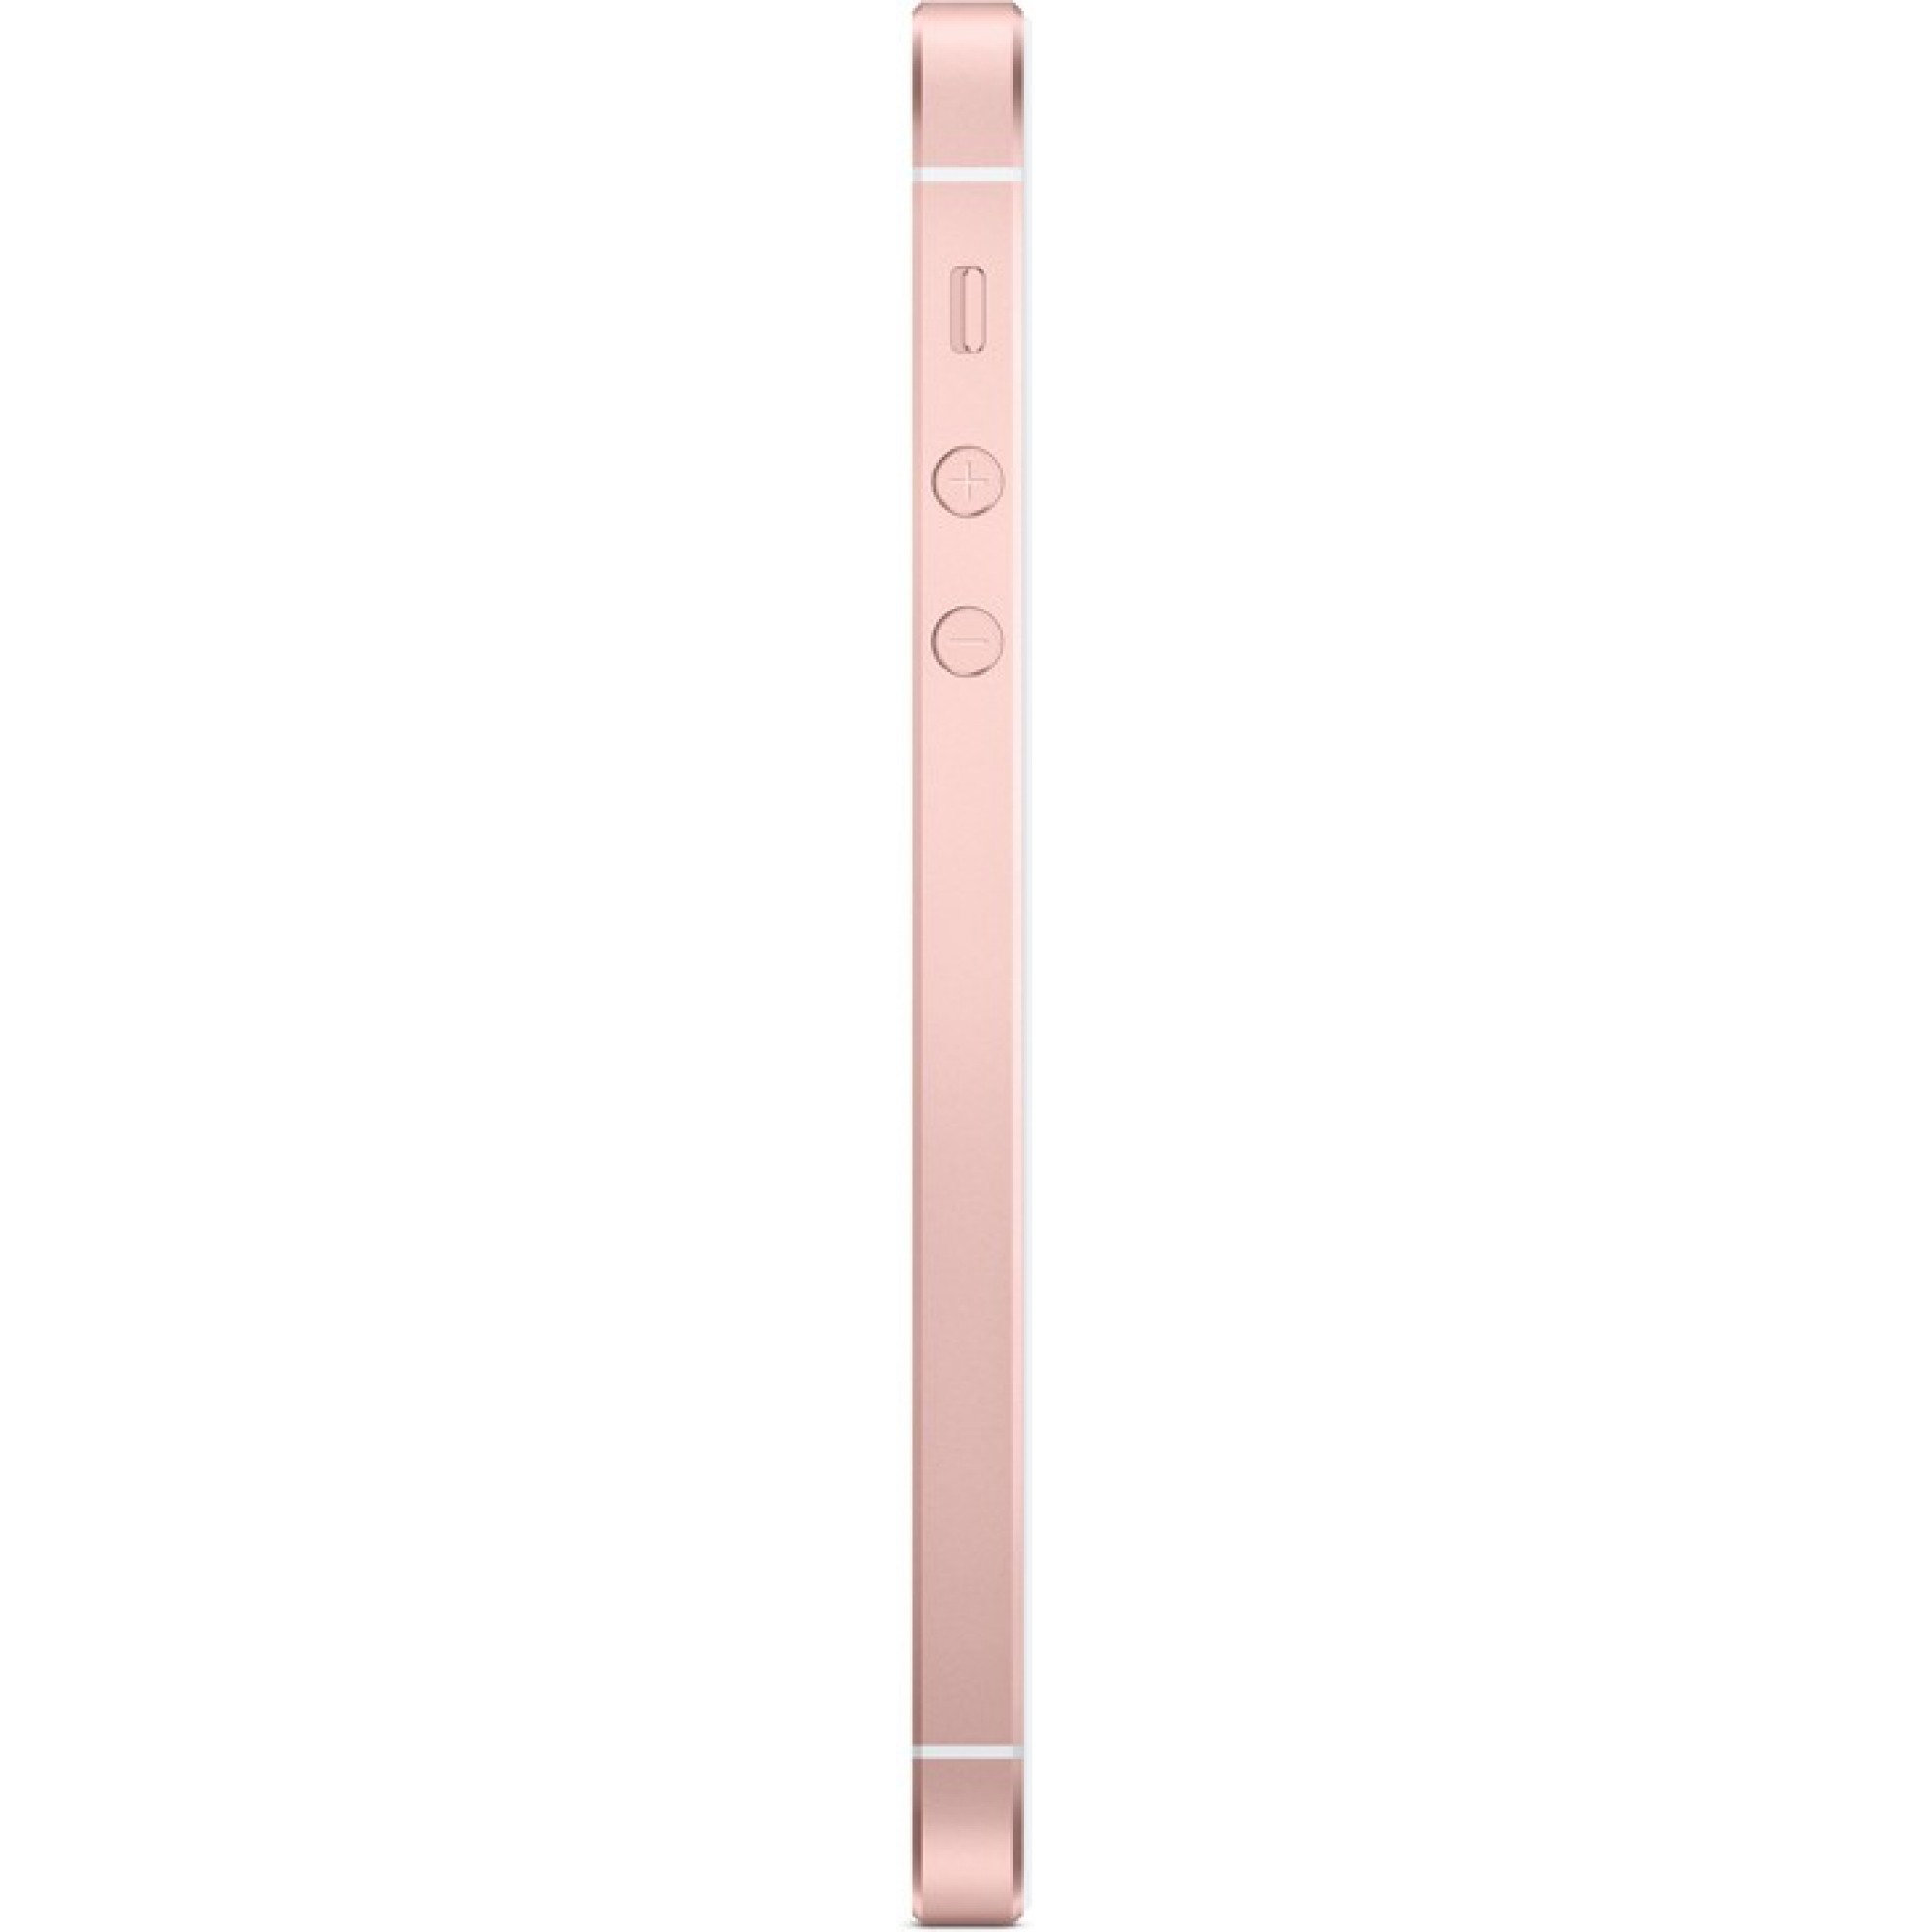 Apple iPhone 5 SE (Rose Gold, 32 GB) Refurbished Like New 3 Month Warranty  - Gold